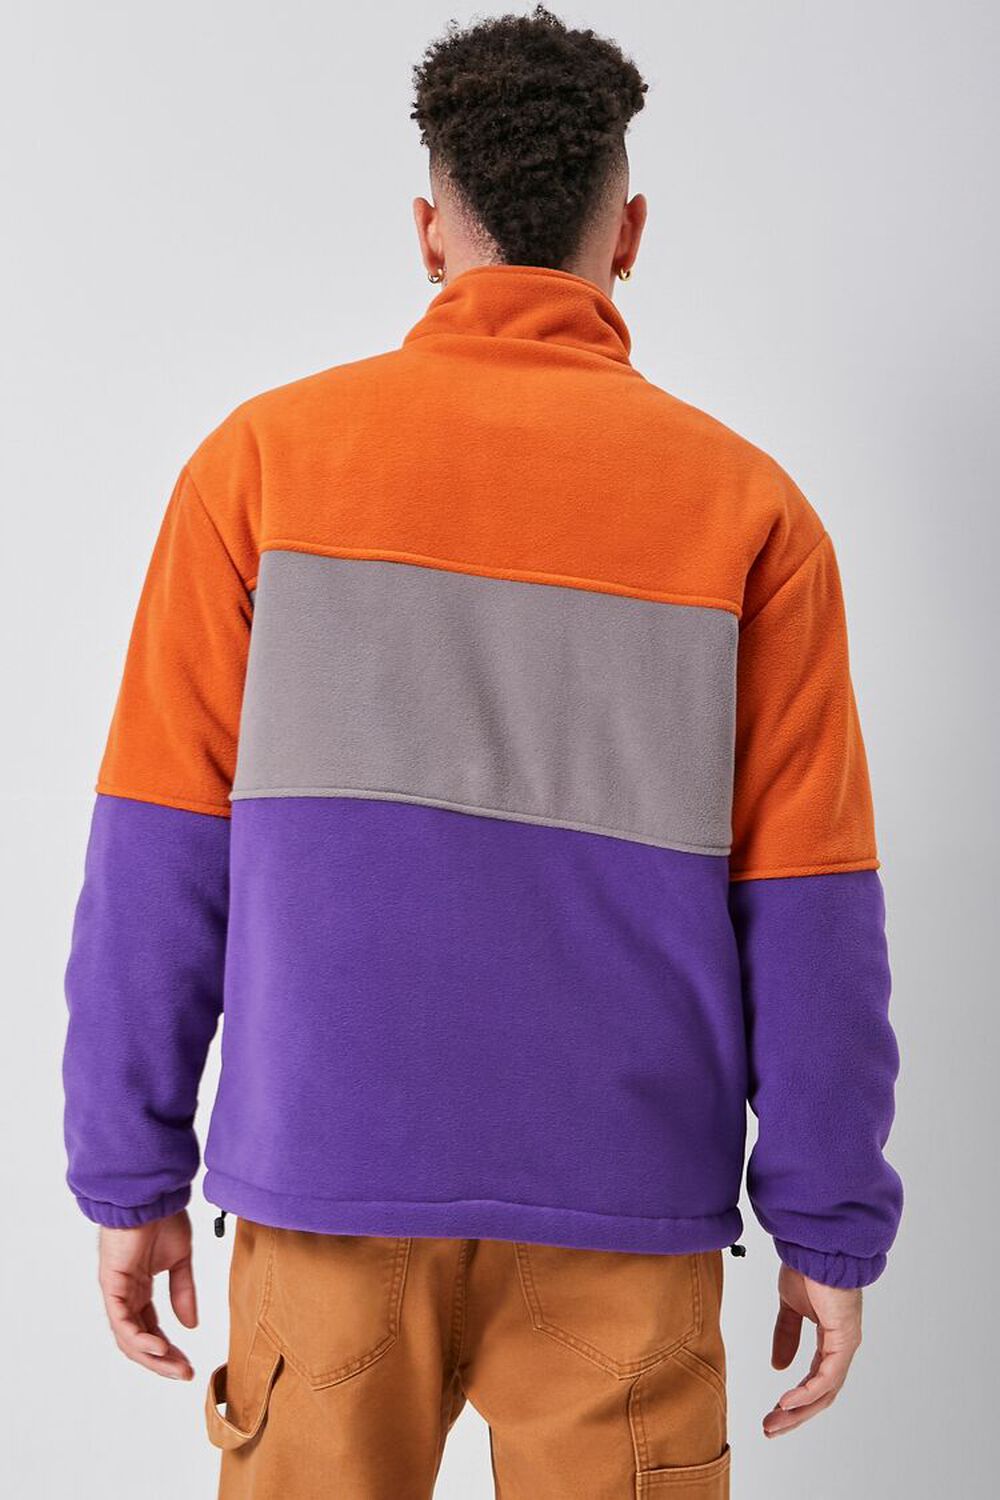 ORANGE/PURPLE Fleece Colorblock Jacket, image 3